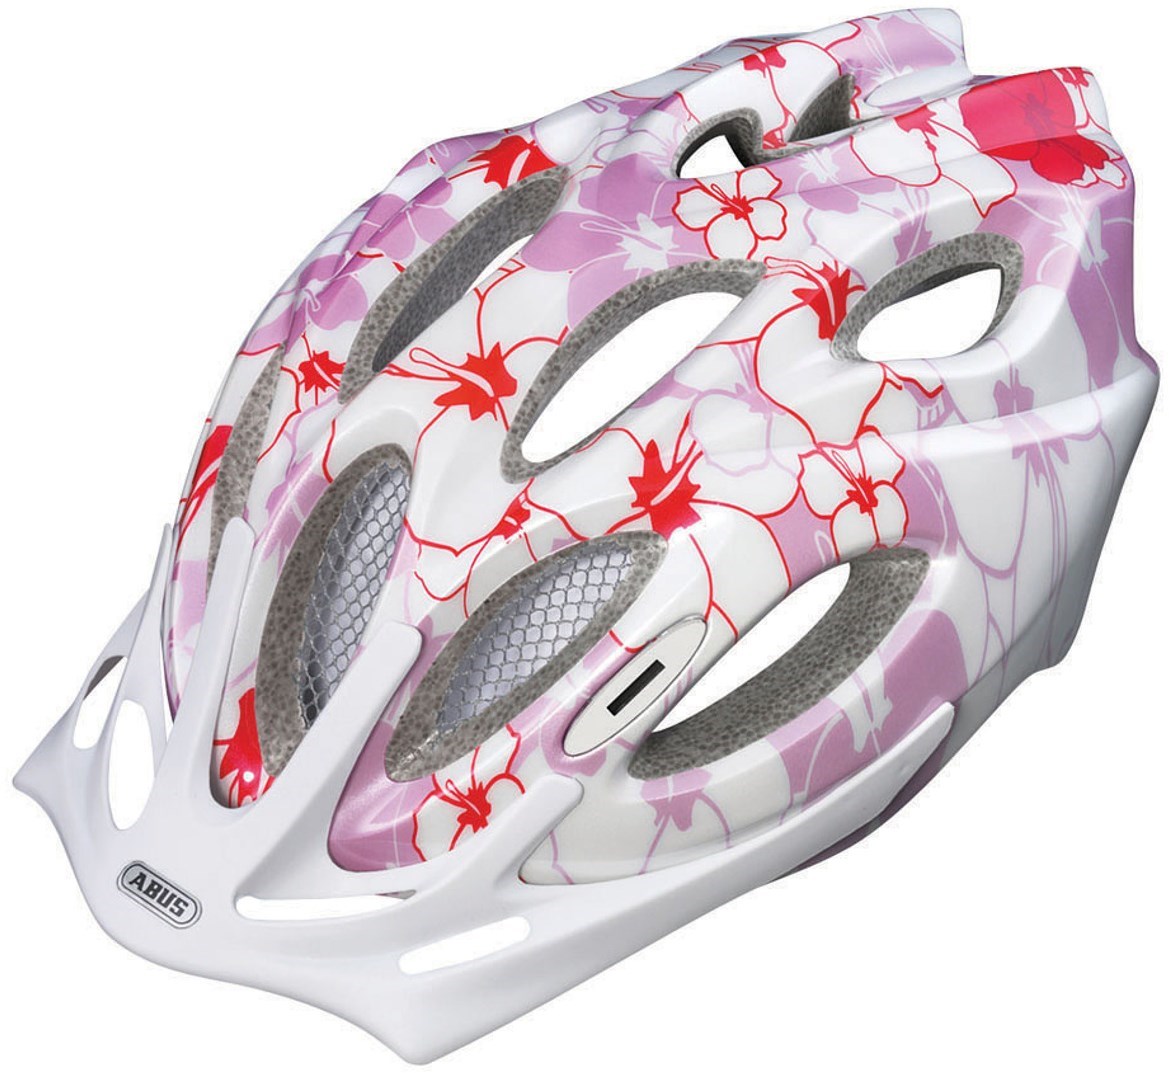 Abus Arica Womens MTB Cycling Helmet With Rear LED Light